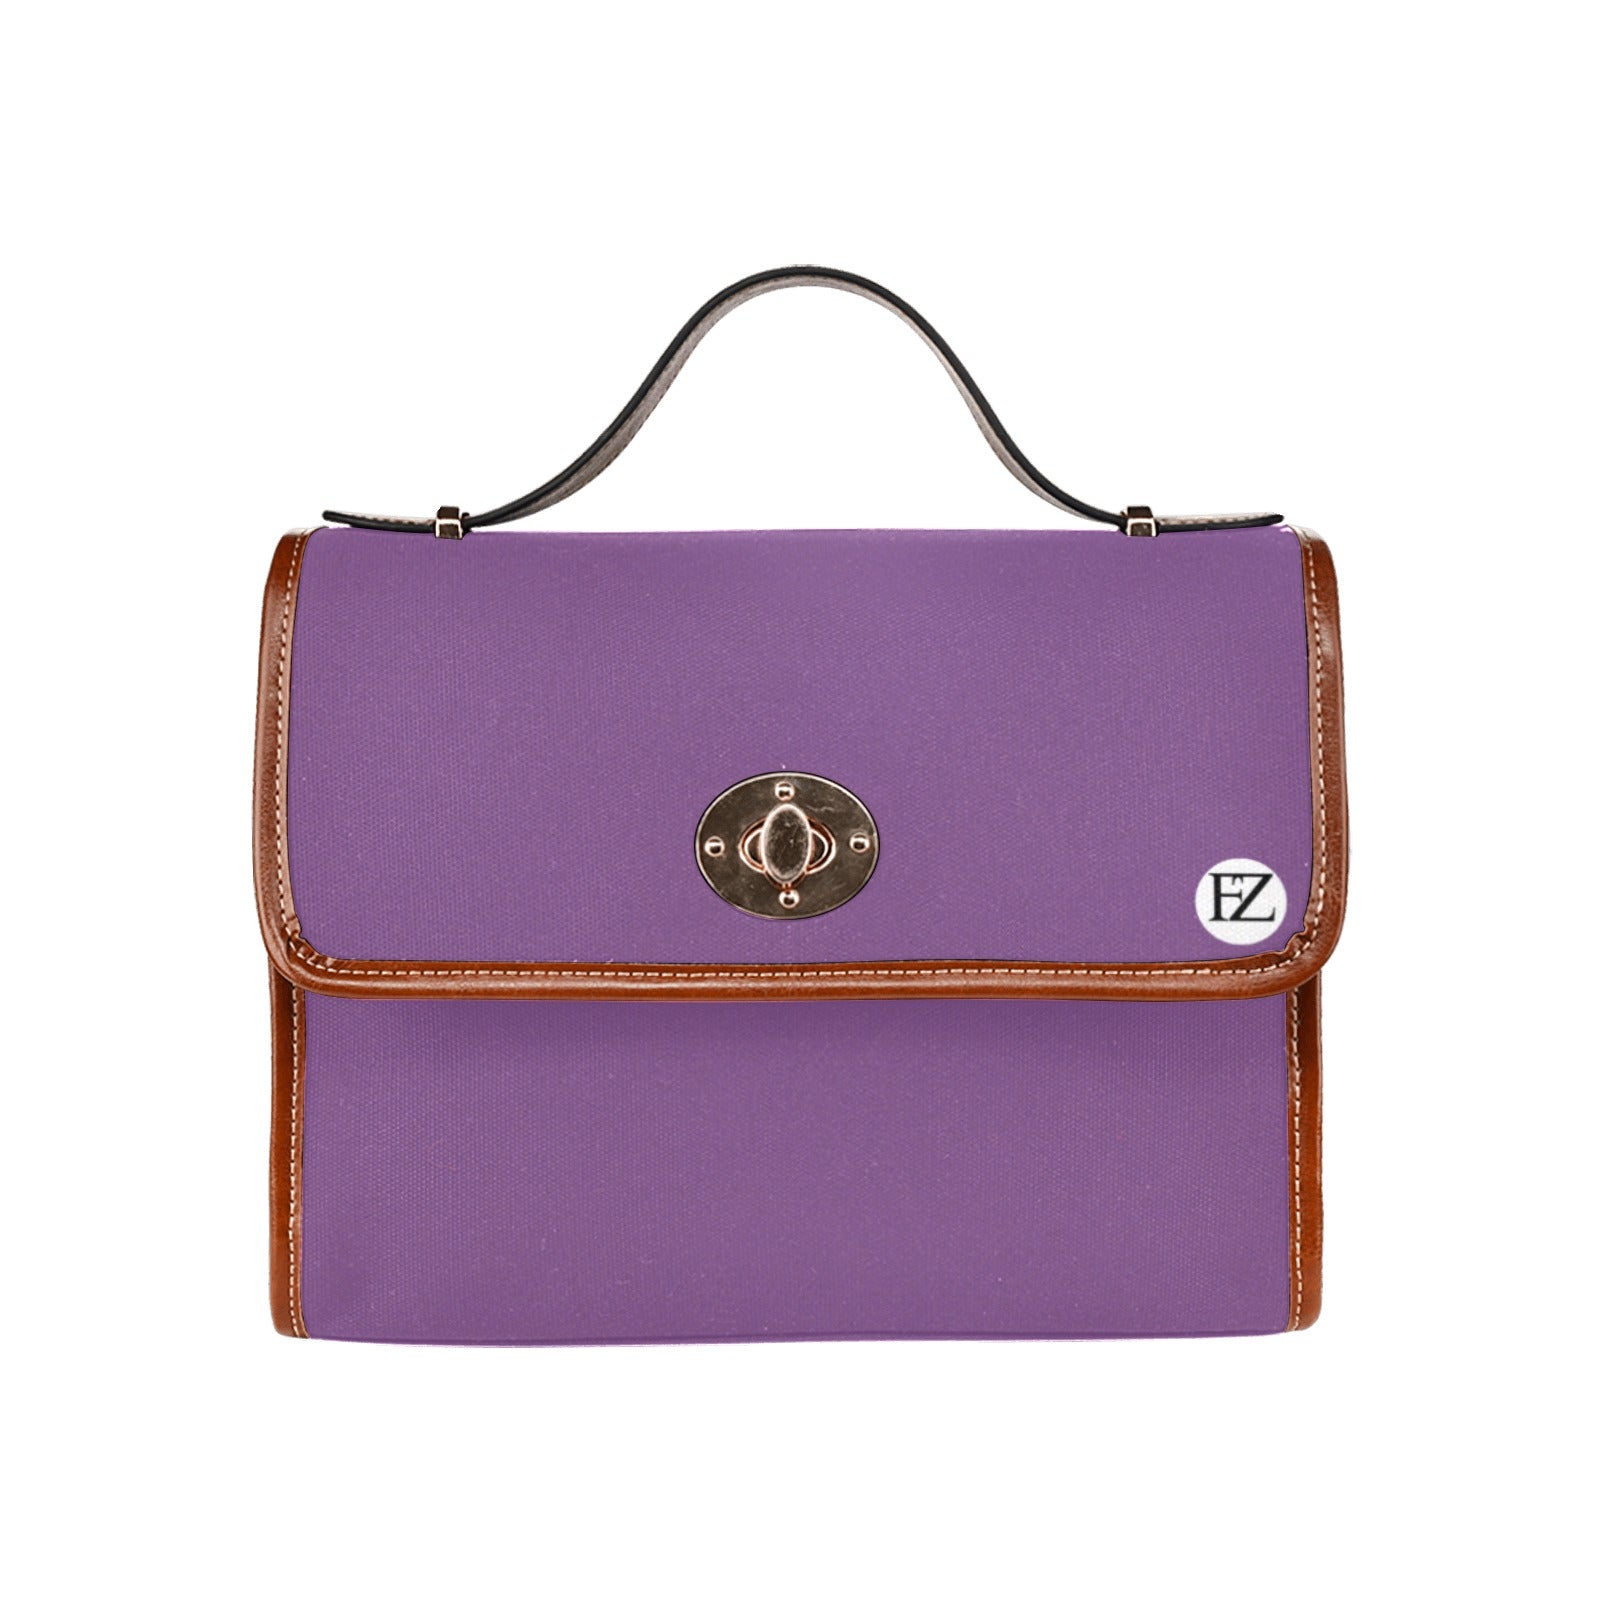 fz original handbag one size / fz - purple all over print waterproof canvas bag(model1641)(brown strap)